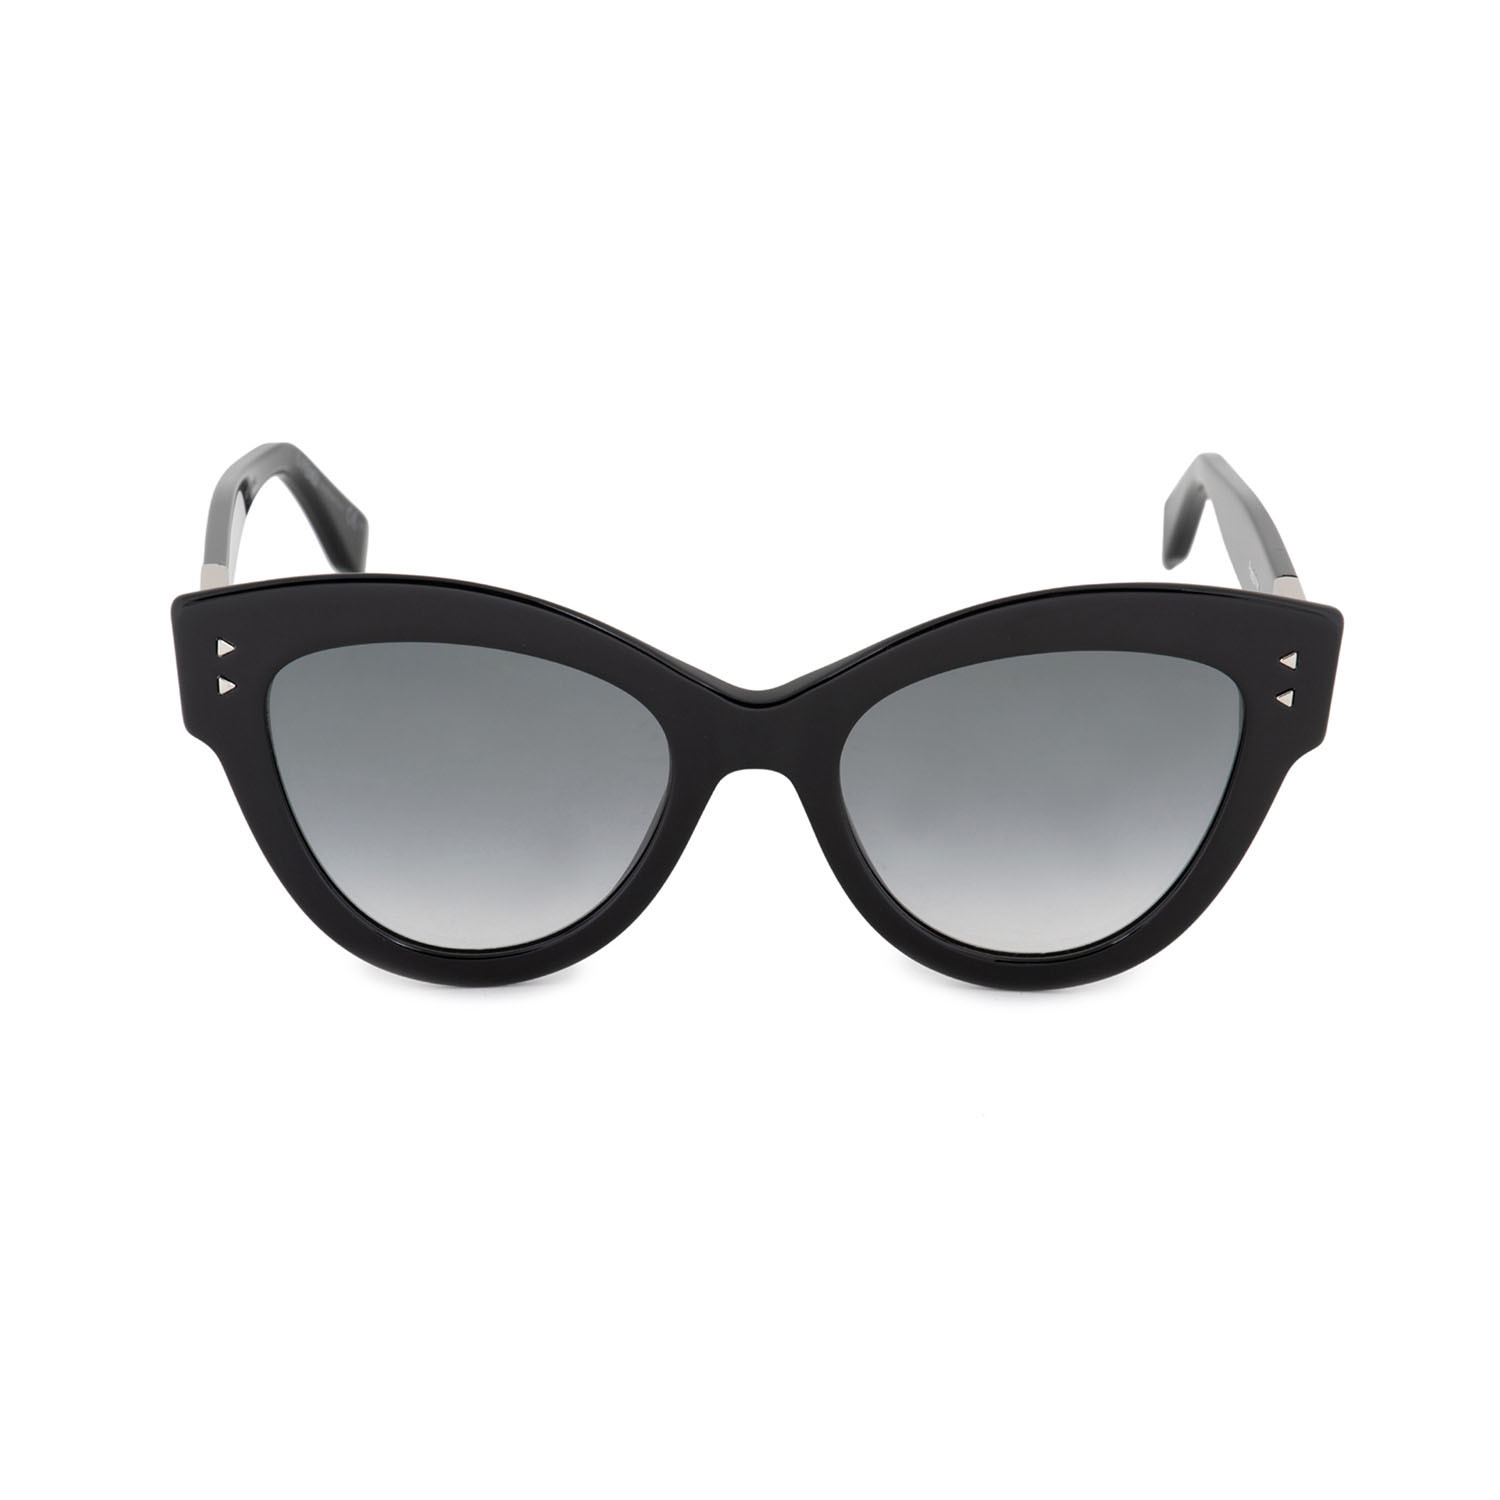 Fendi // Women's Sunglasses V2 // Black + Gray Gradient - Women's ...